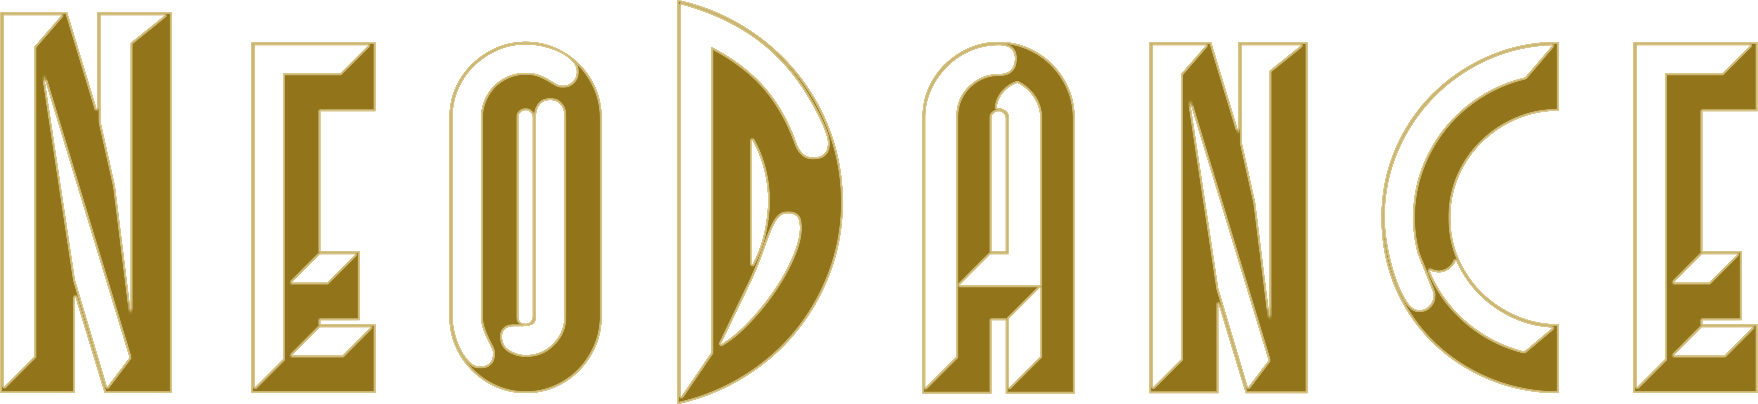 NeoDance logo